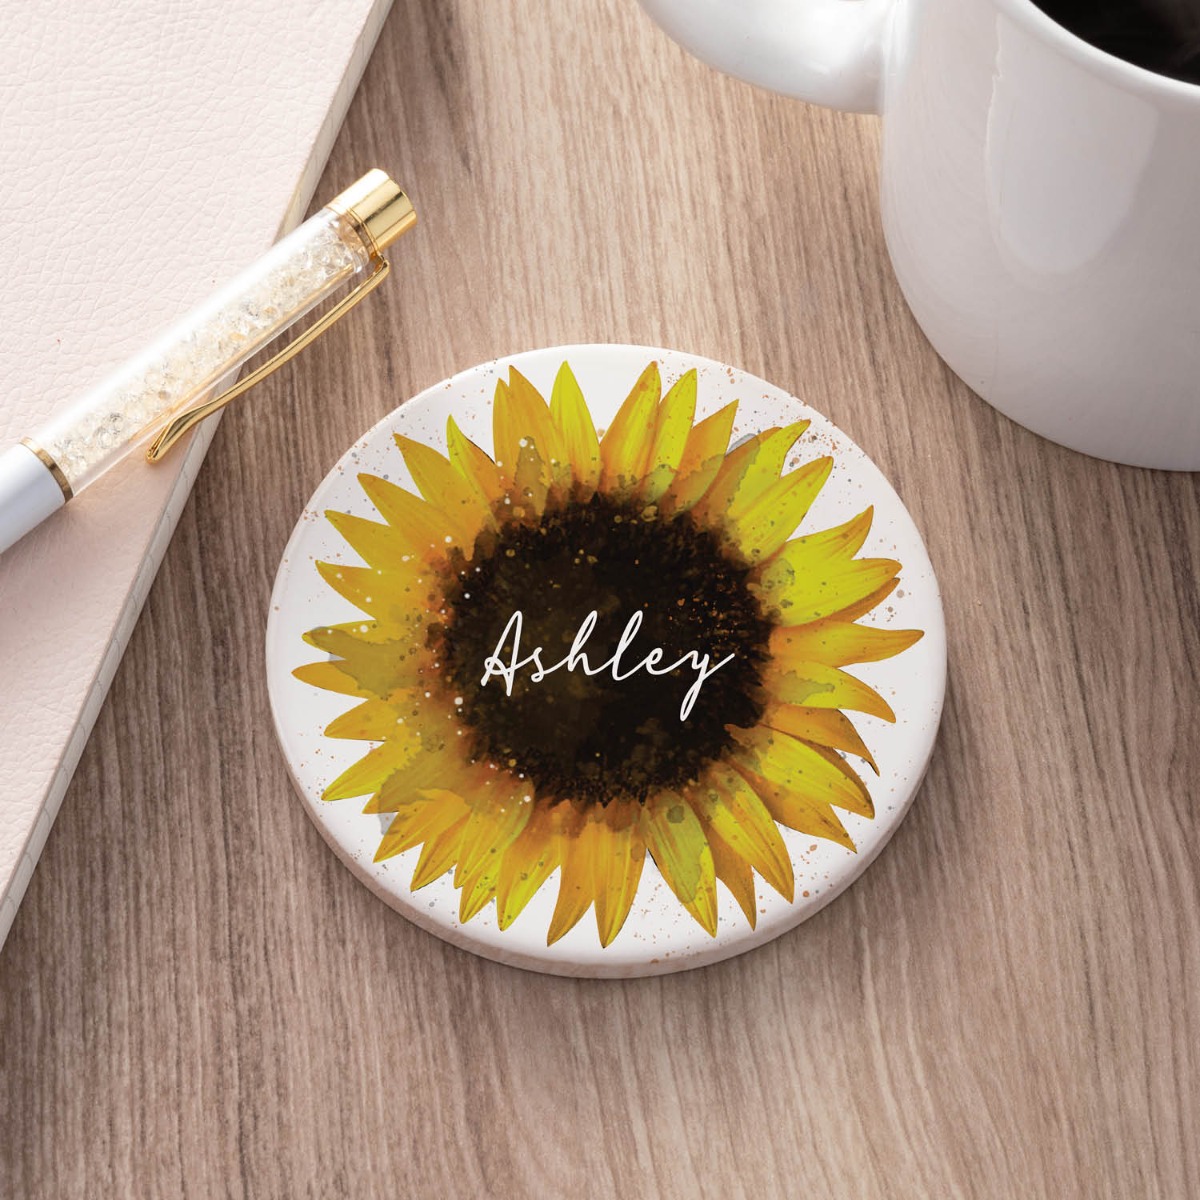 Sunflower Personalized Round Desk Coaster